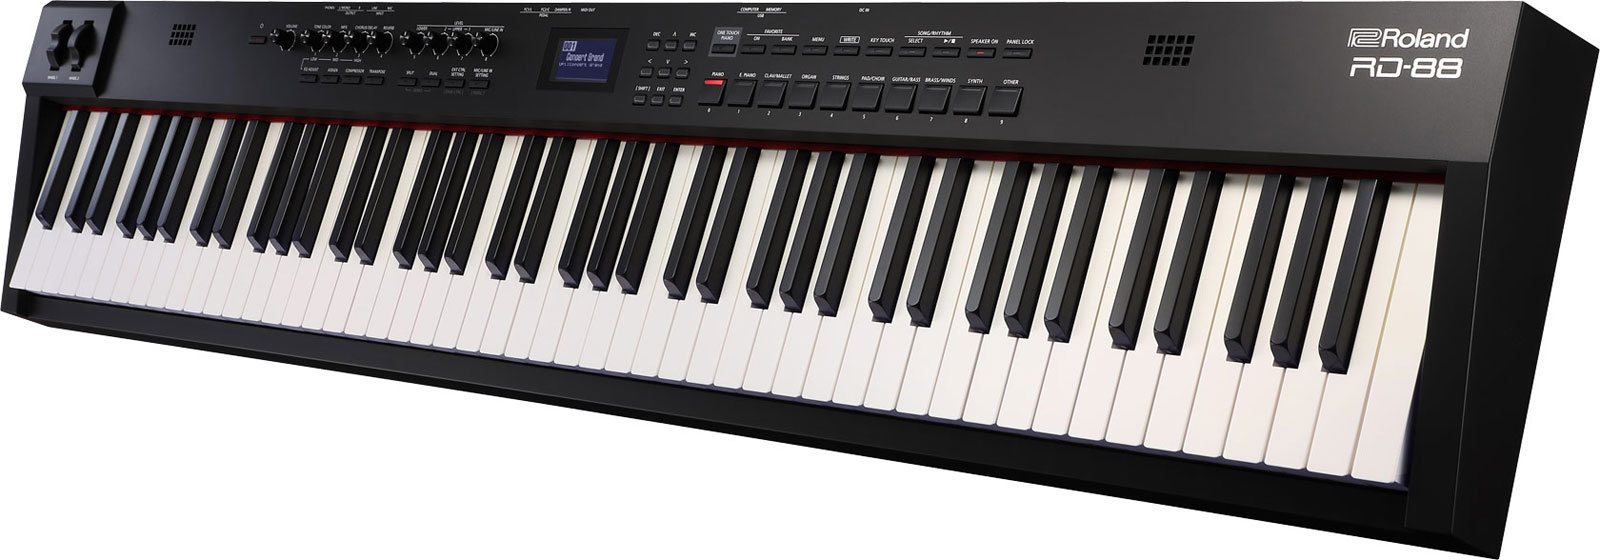 Roland Rd-88 - Stage keyboard - Variation 2